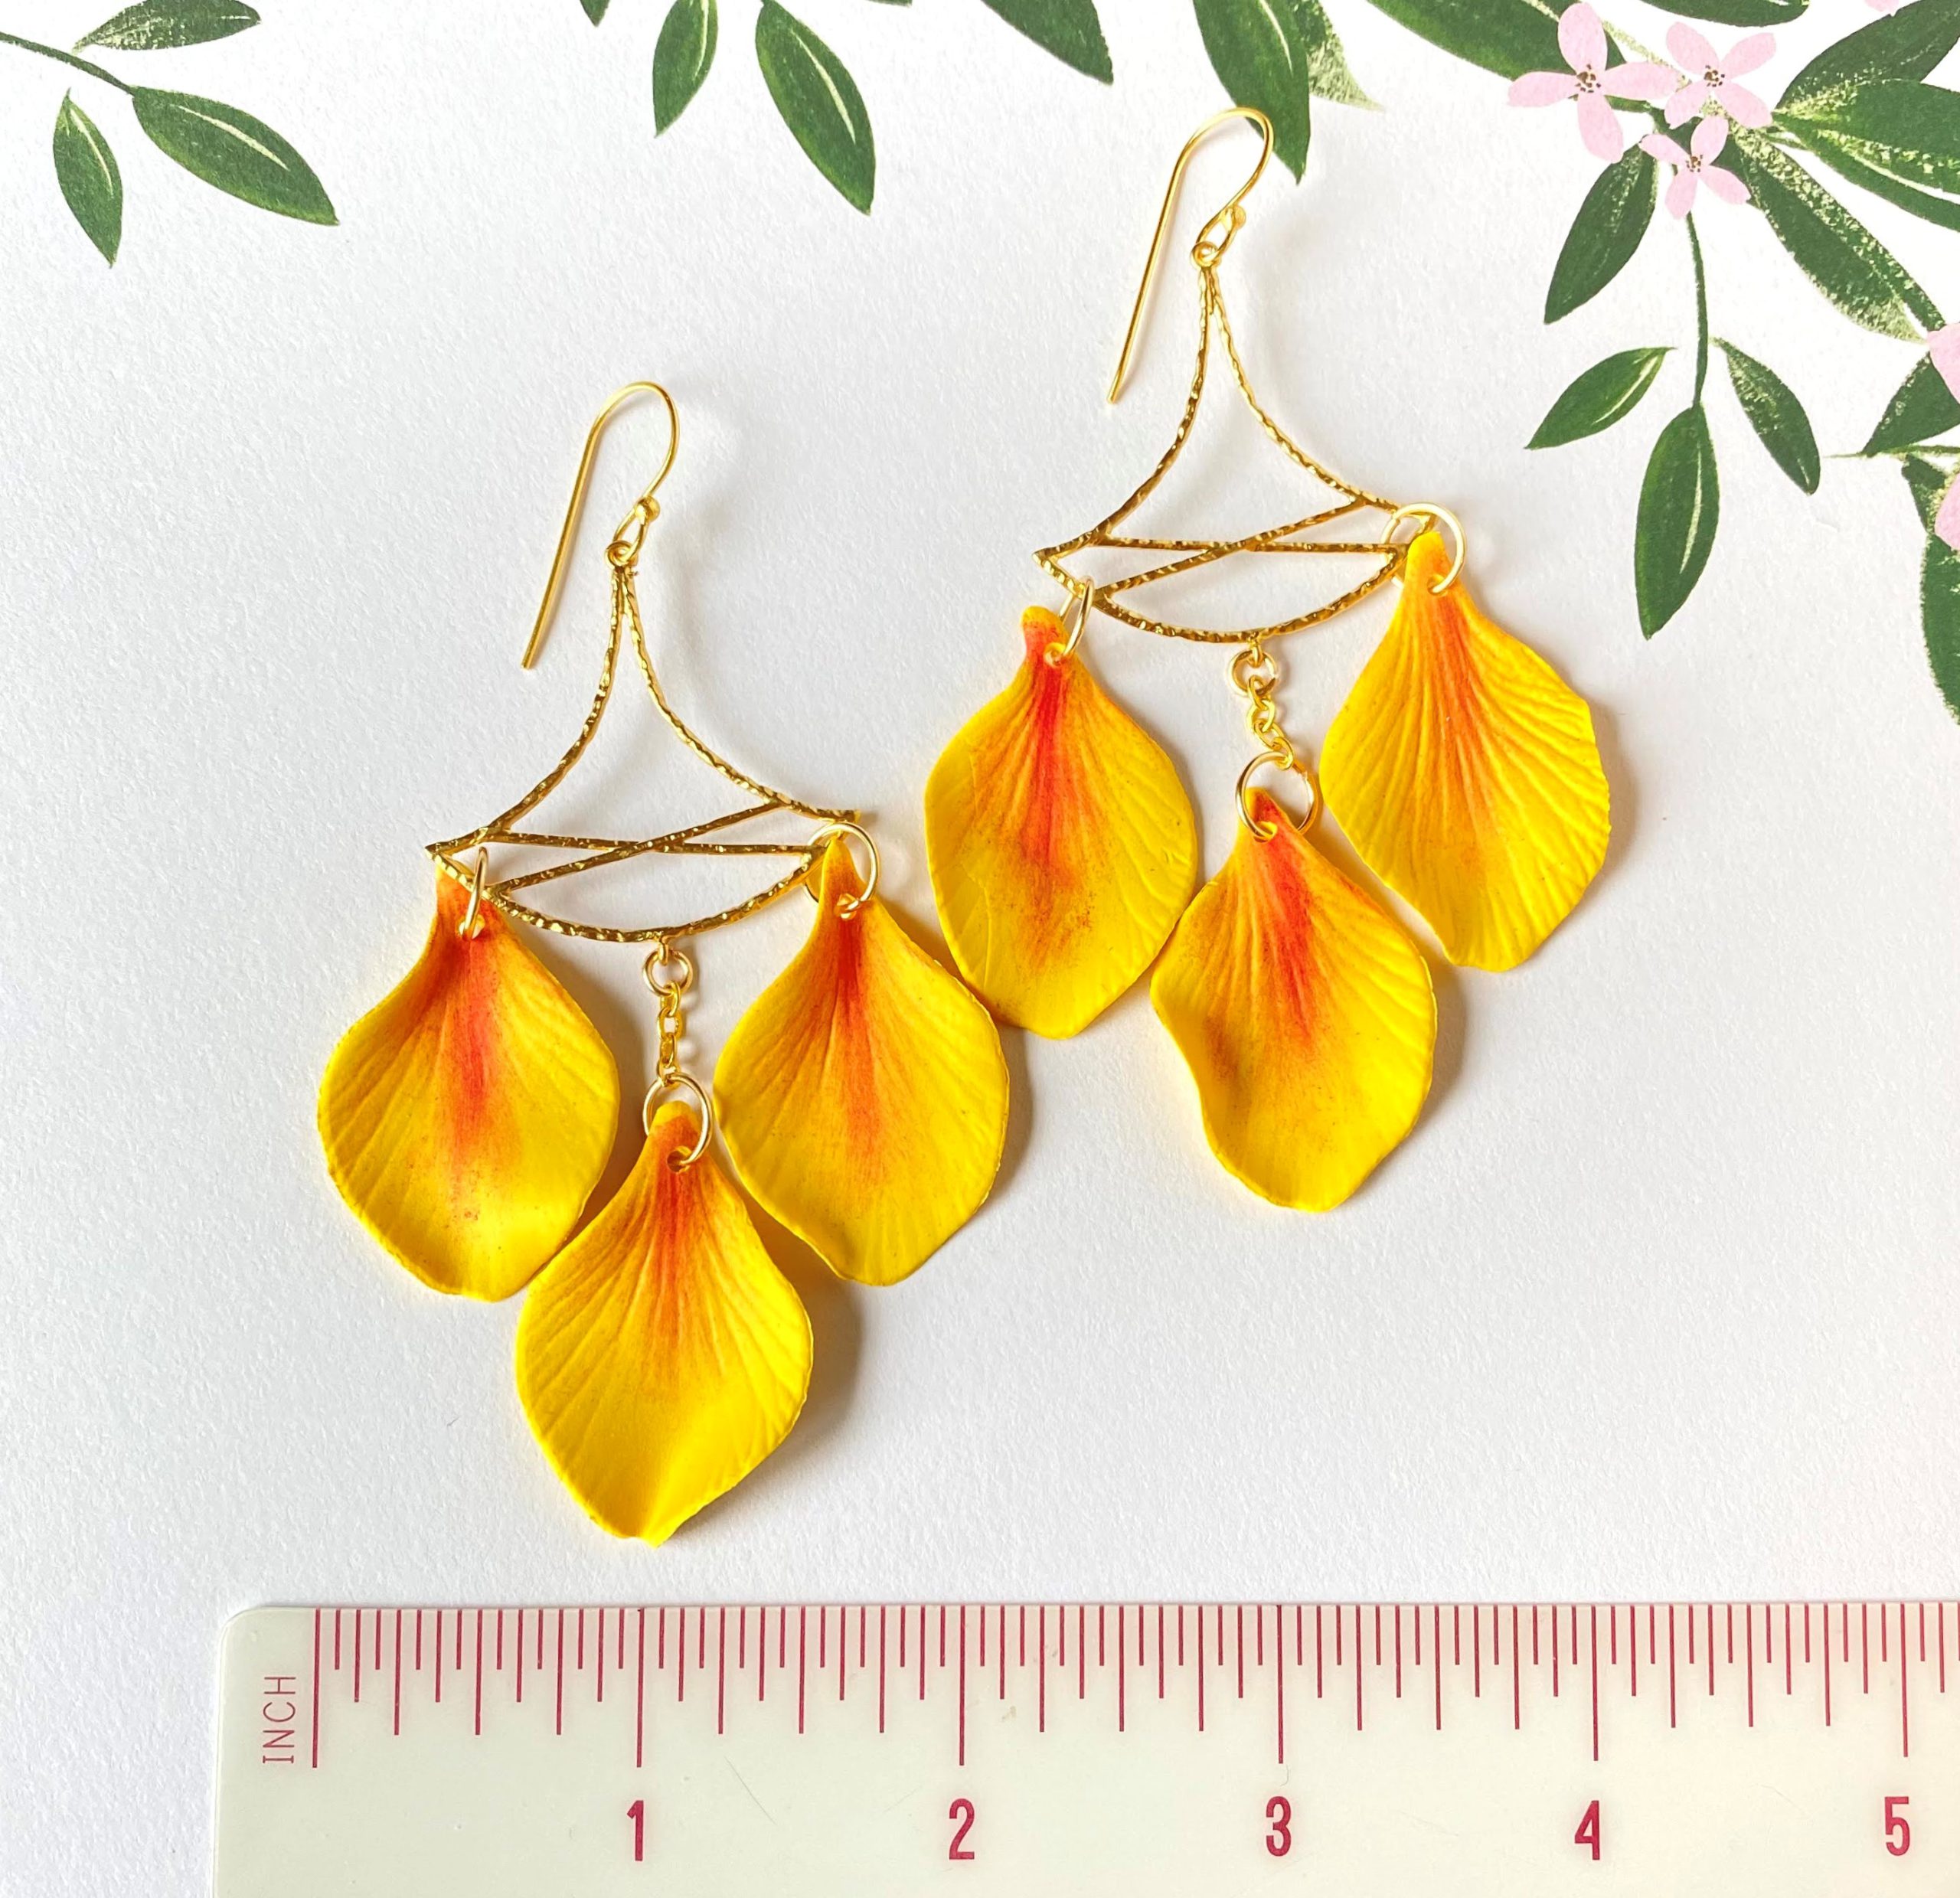 California Poppy Dangle Earrings